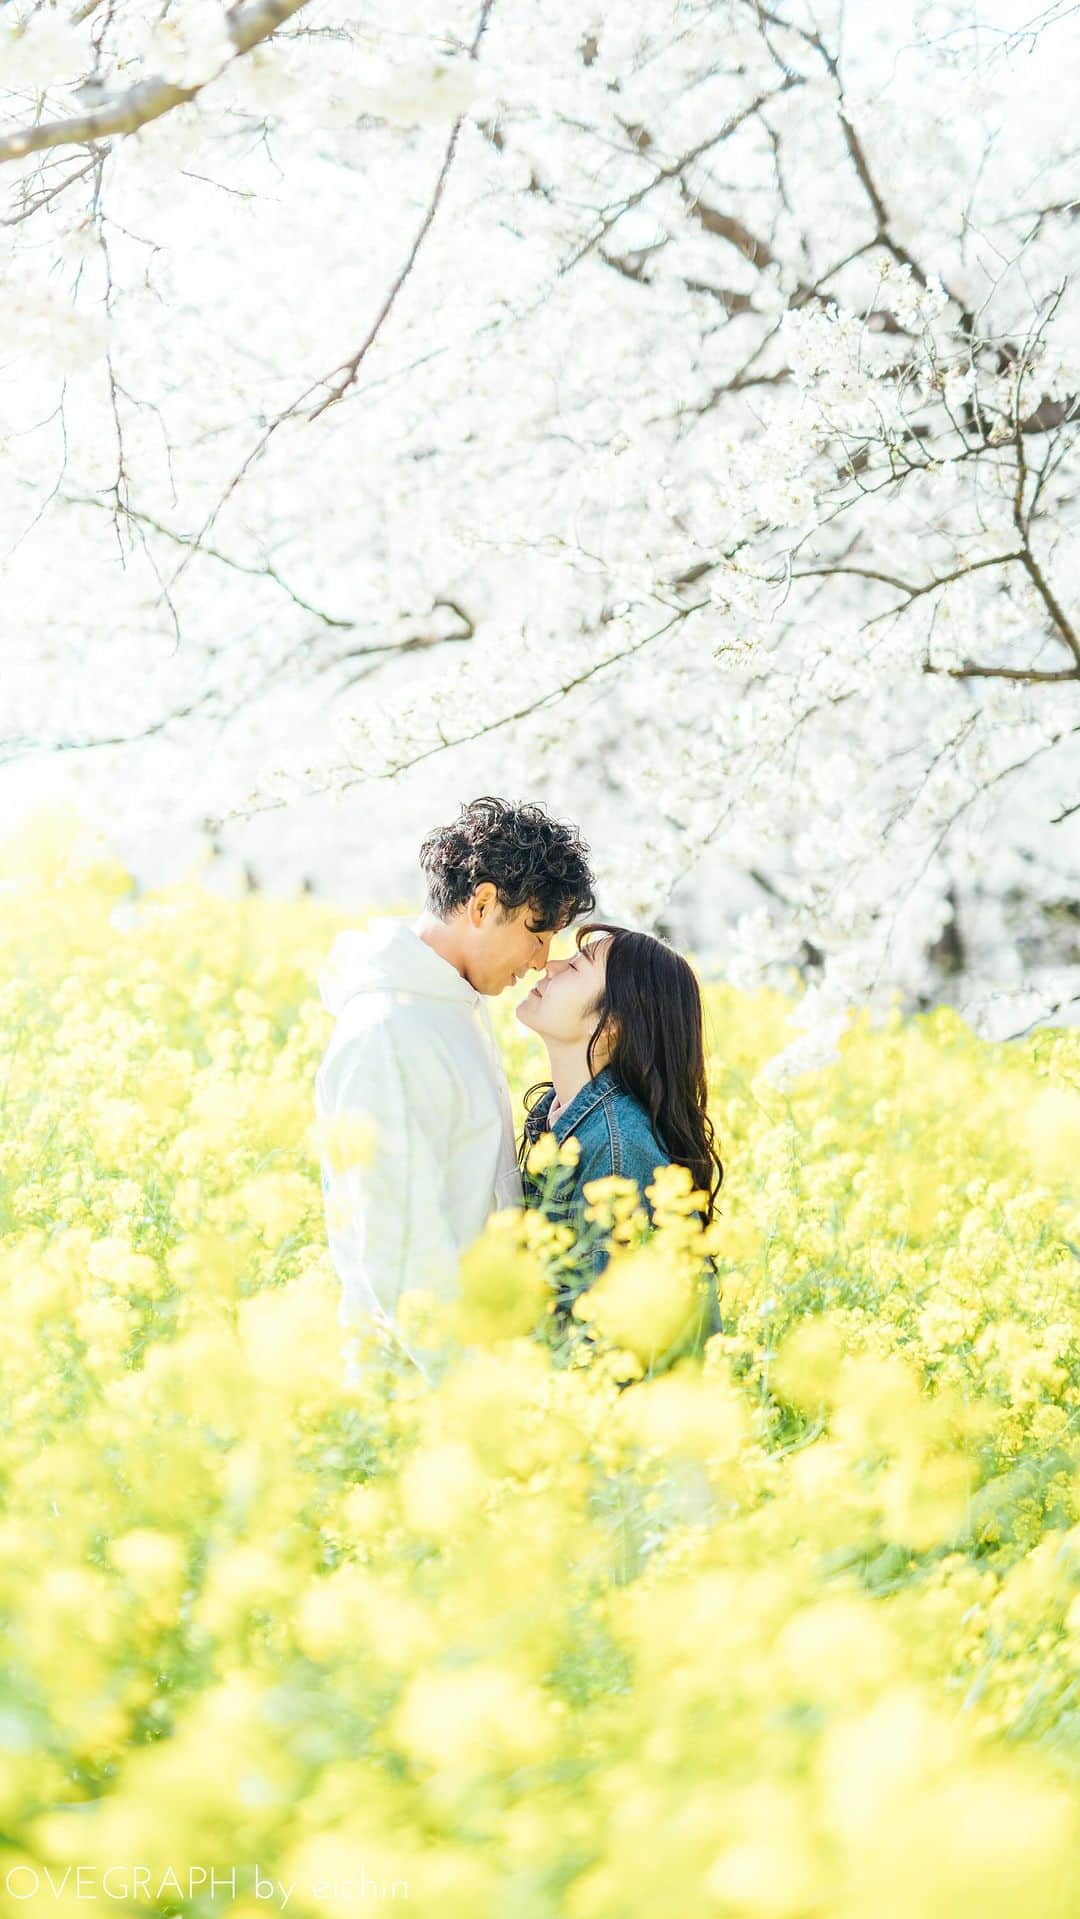 Lovegraph［ラブグラフ］のインスタグラム：「桜と菜の花とカップルフォト👫🌸 ㅤㅤㅤㅤㅤㅤ 今年も全国いろんな地域で桜フォトを 撮影させていただきました☺️✨ ㅤㅤㅤ 今年もあっという間に桜は散って、 次は新緑の季節🌿✨楽しみです☺️🕊️ ㅤㅤㅤㅤㅤㅤ #ラブグラフ #Lovegraph #幸せな瞬間をもっと世界に #フォトウェディング #ロケーションフォト #カップルフォト #カップルの日常 #出張カメラマン」